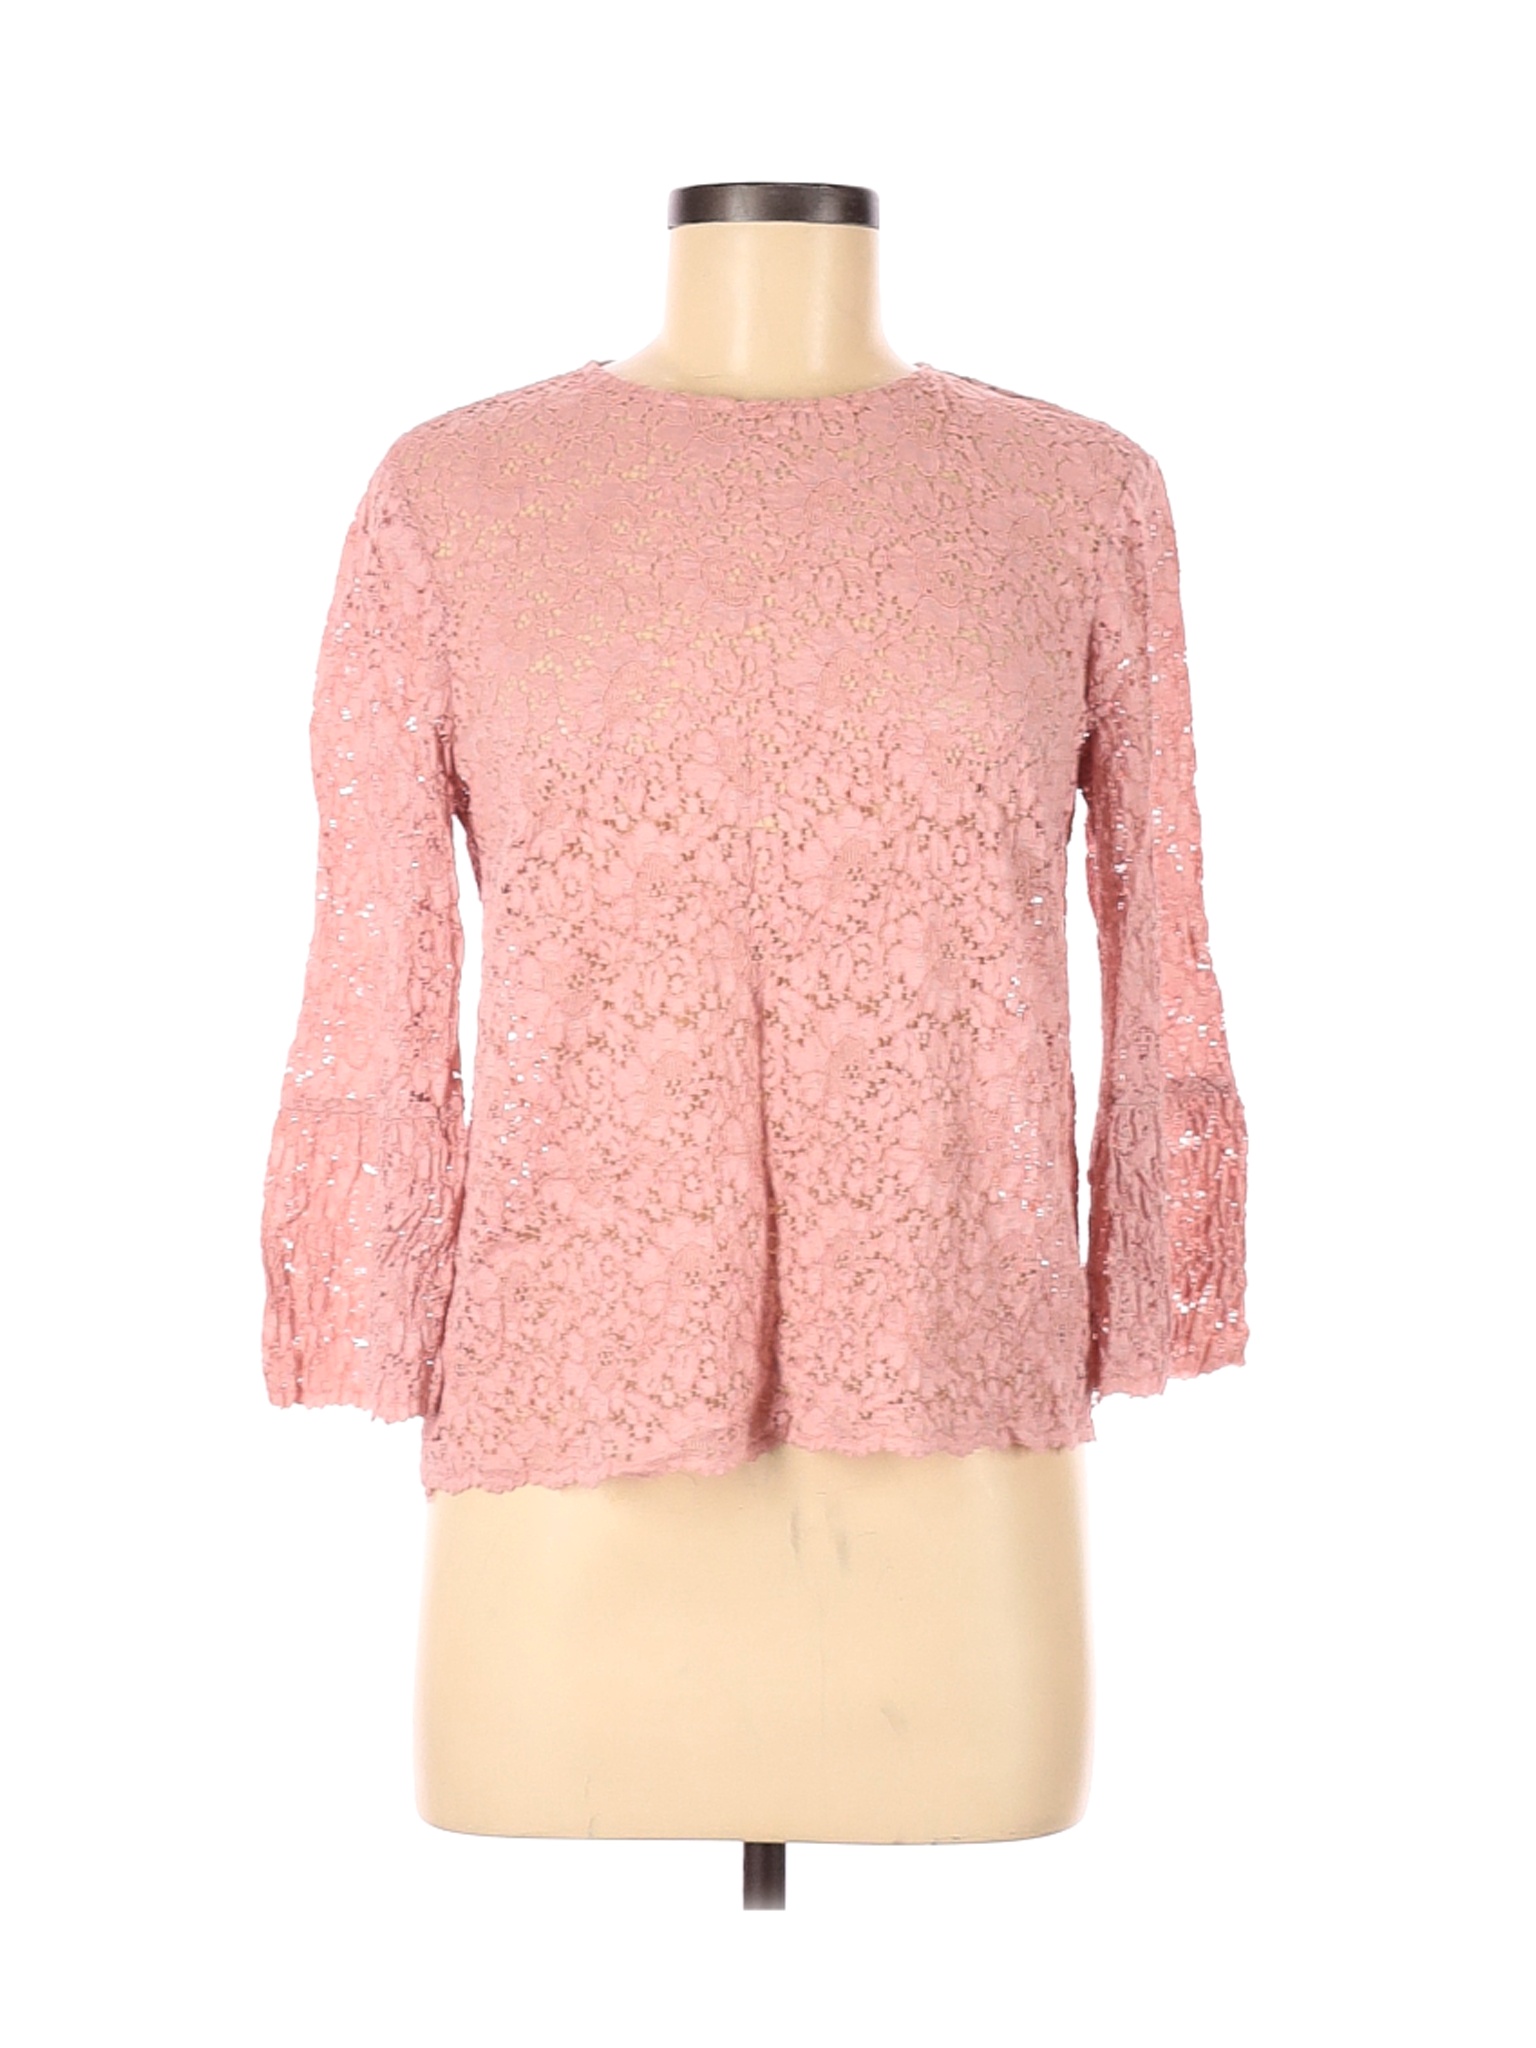 Zara Women Pink Long Sleeve Blouse M | eBay